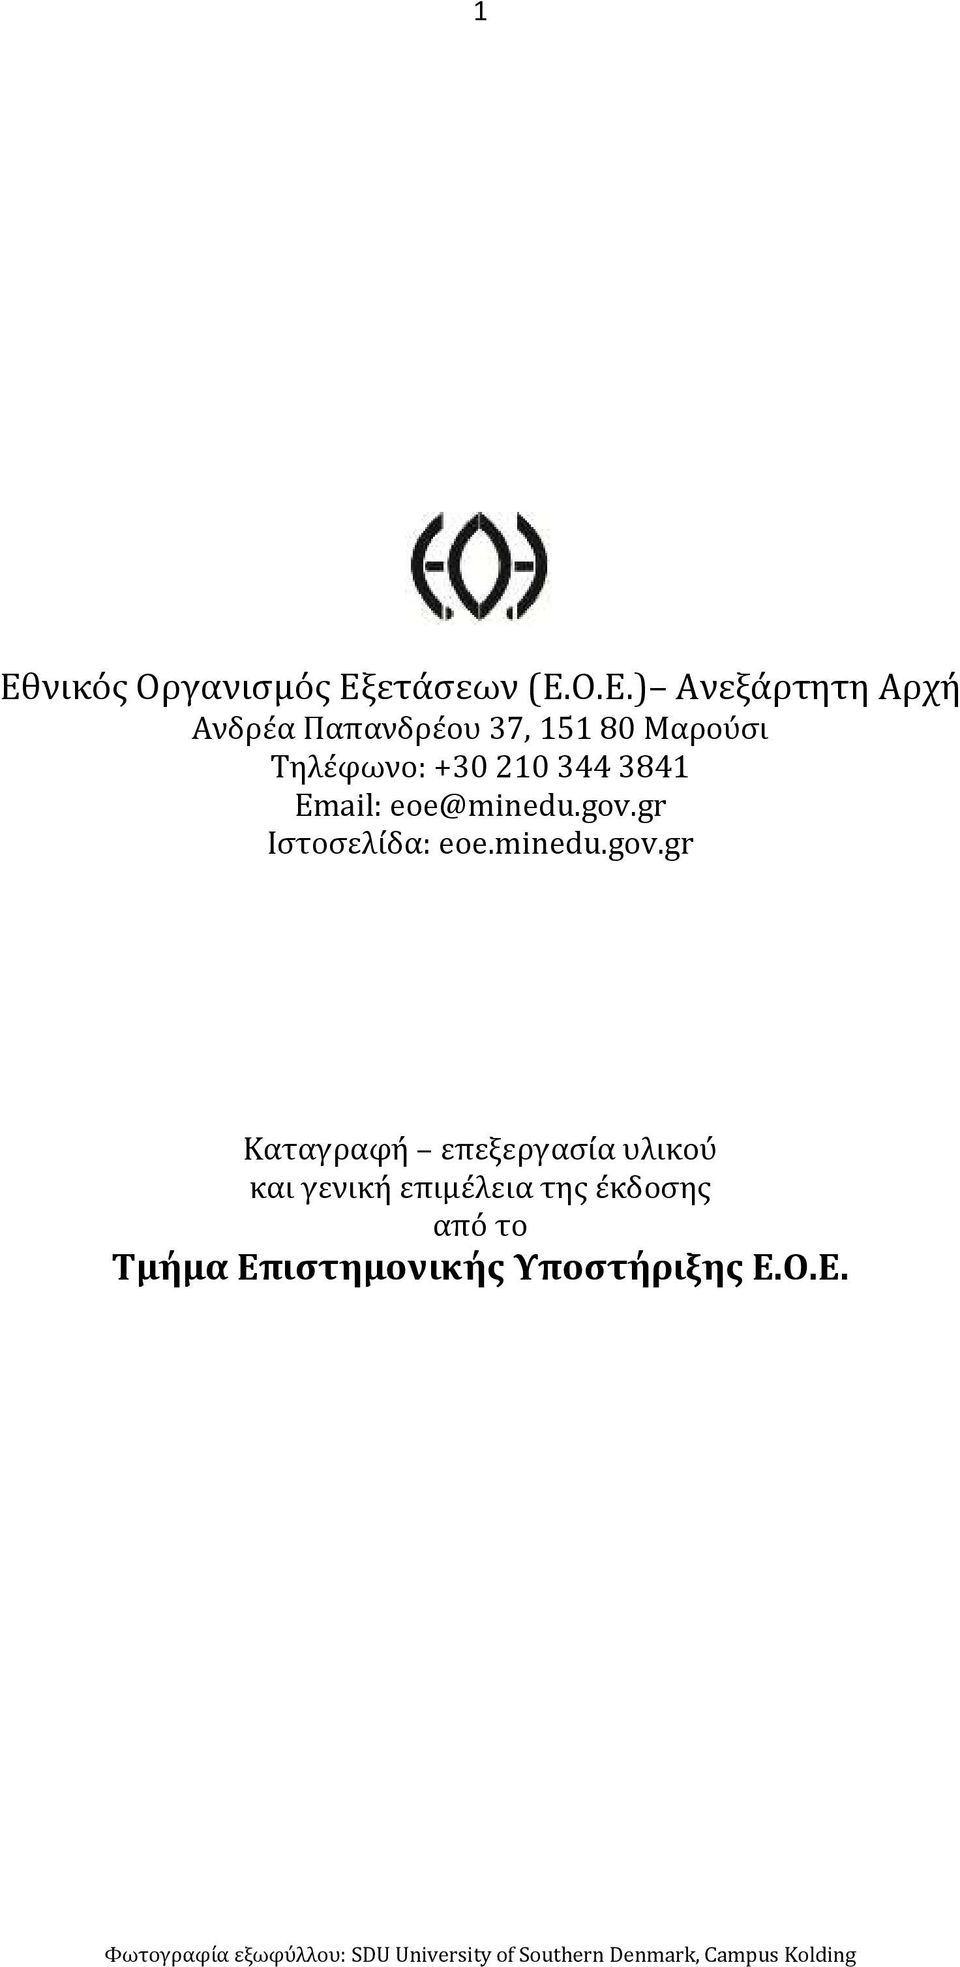 gr Ιστοσελίδα: eoe.minedu.gov.